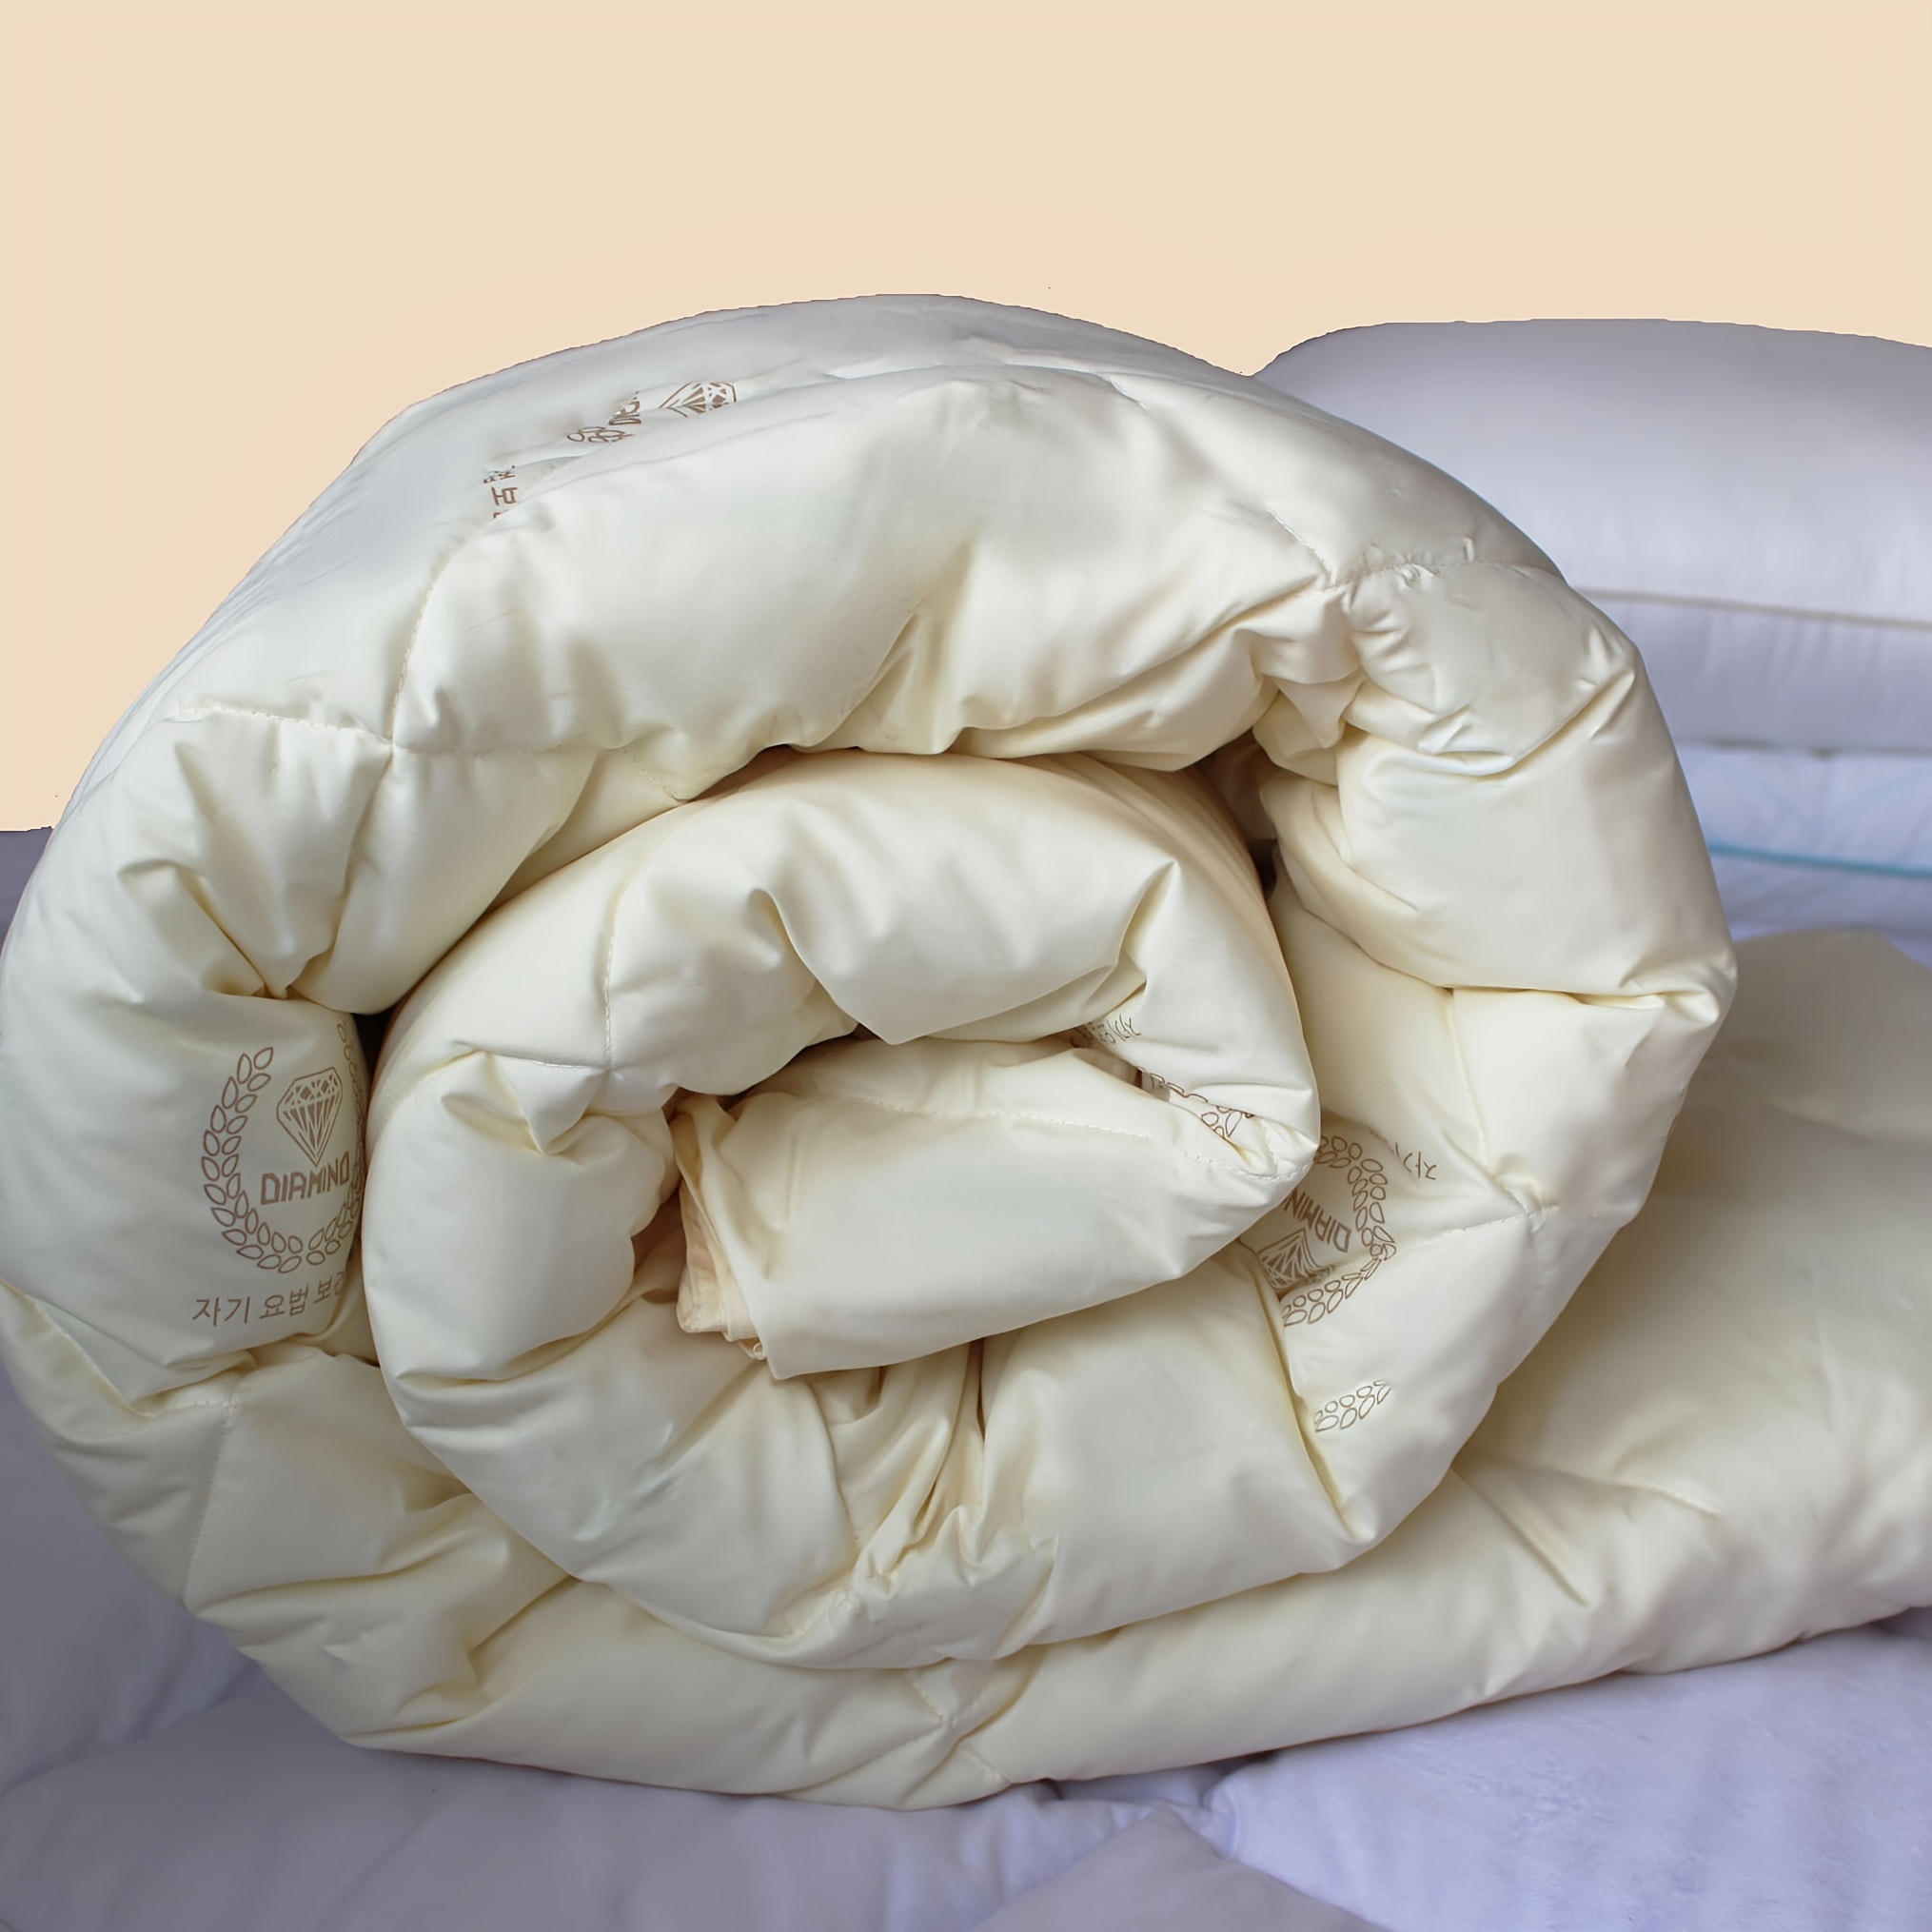 Square Pillow Insert in Down Alternative Microfiber